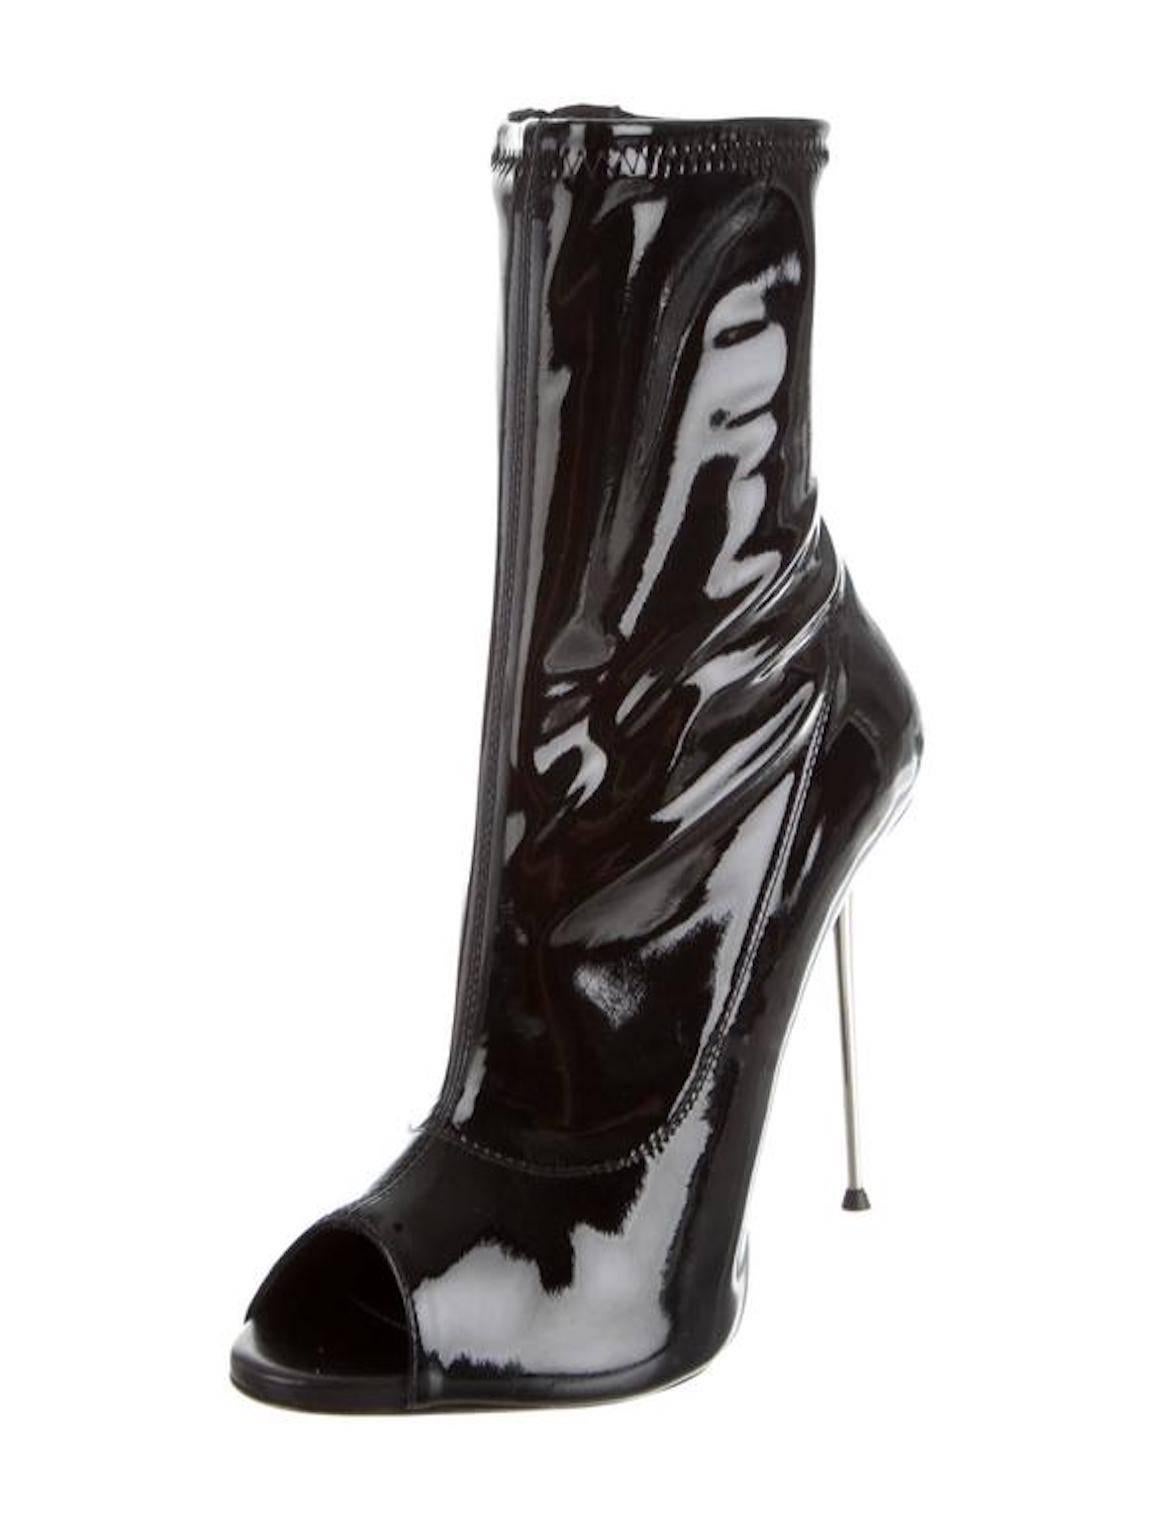 Women's Giuseppe Zanotti New Black Patent Metal Heels Ankle Booties 